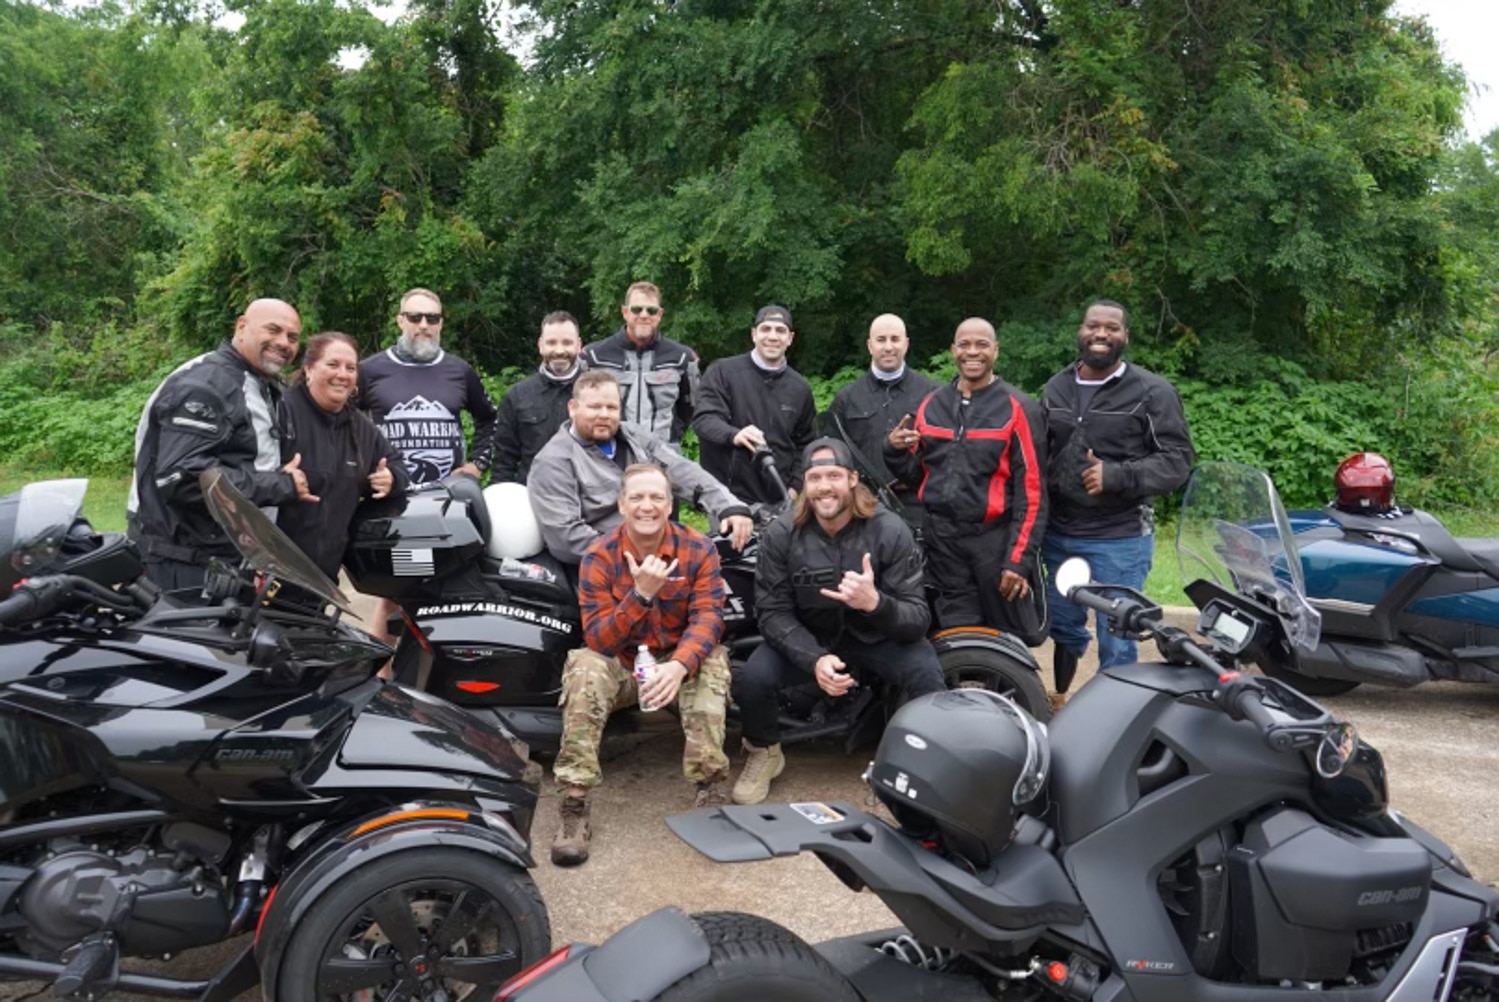 Road Warrior Foundation ride 2021 crew